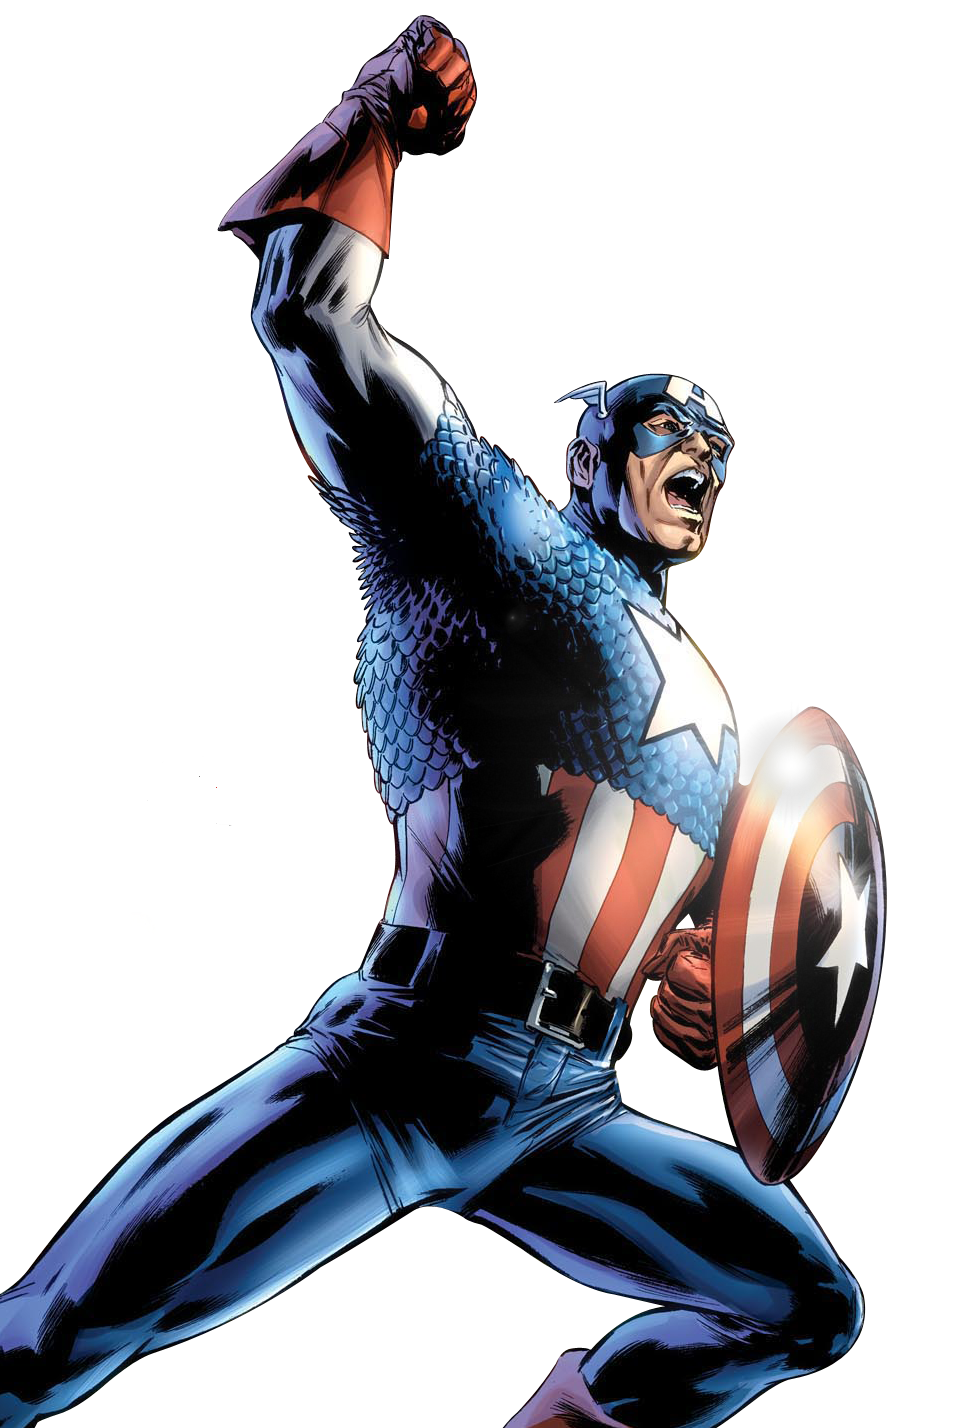 Captain America vs Wolverine (read rules) - Battles - Comic Vine